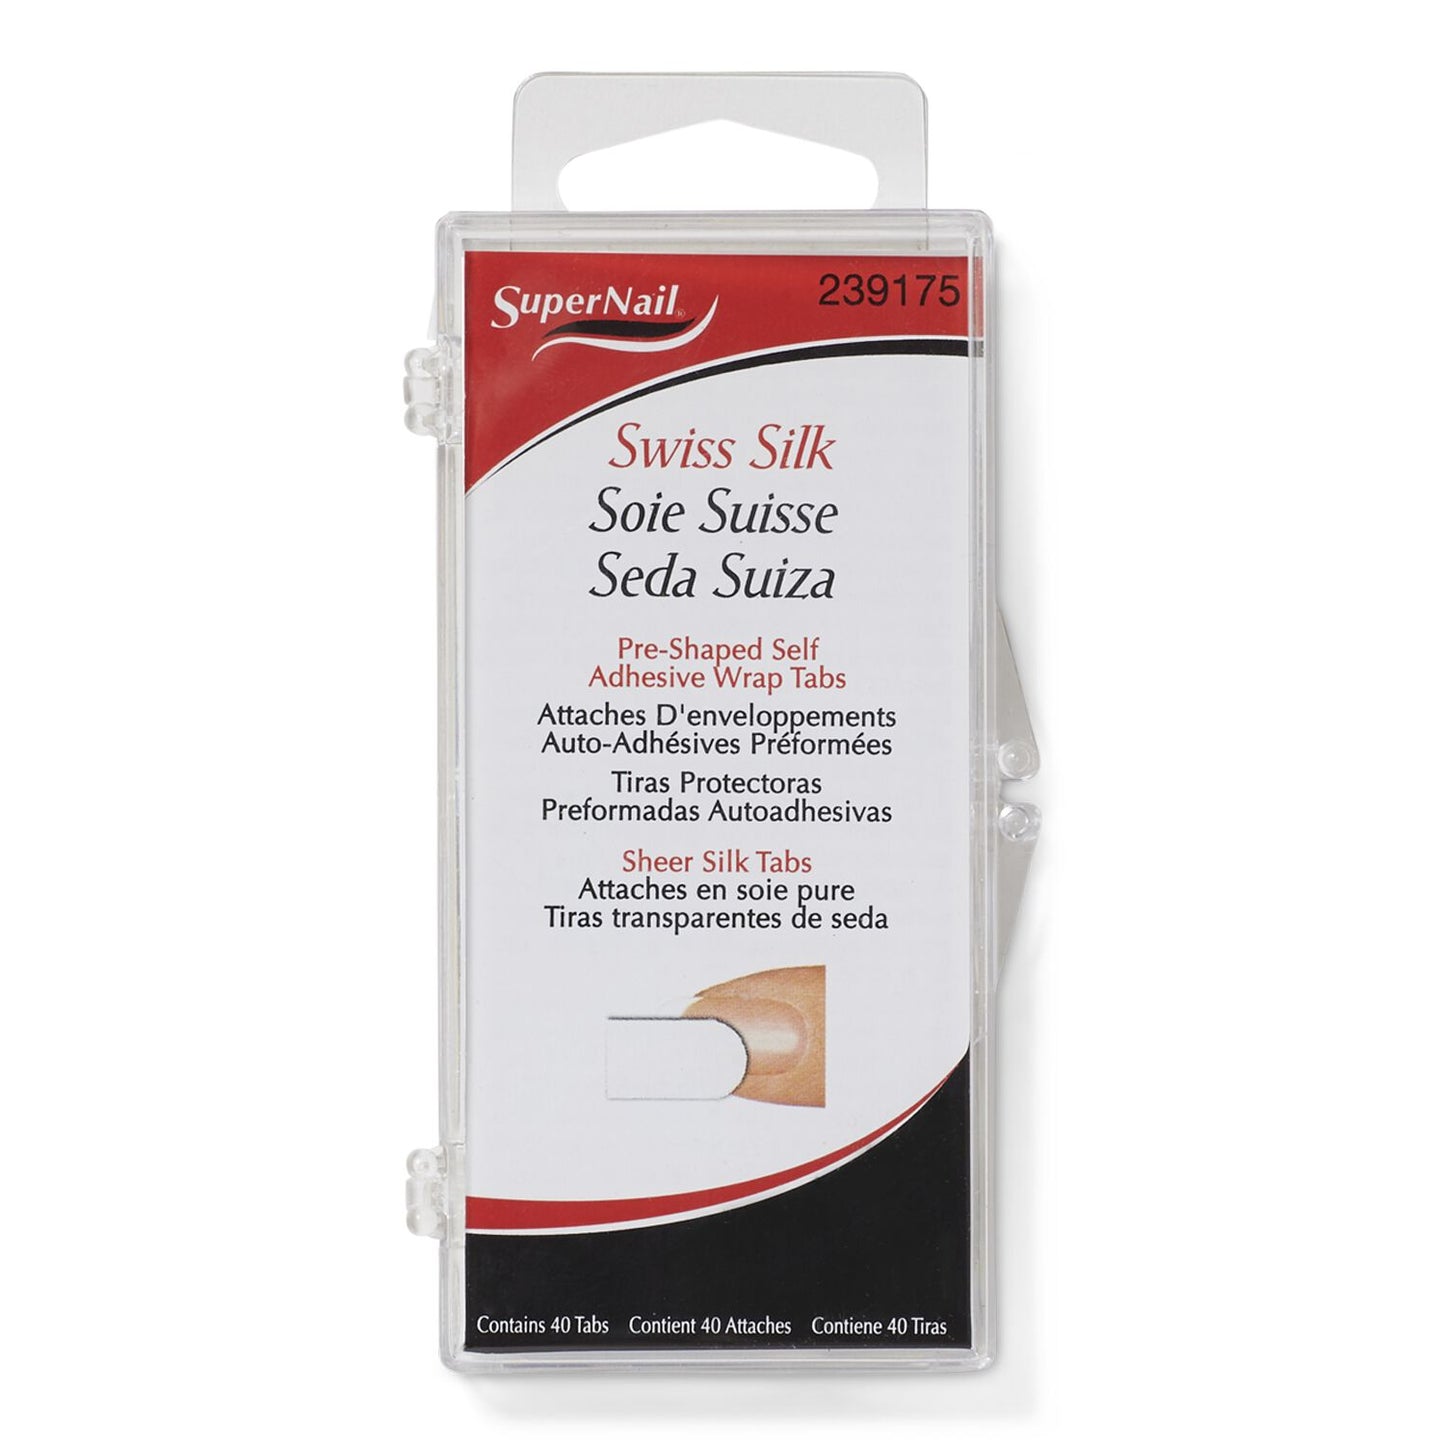 SuperNail Swiss Silk Self Adhesive Wrap Tabs